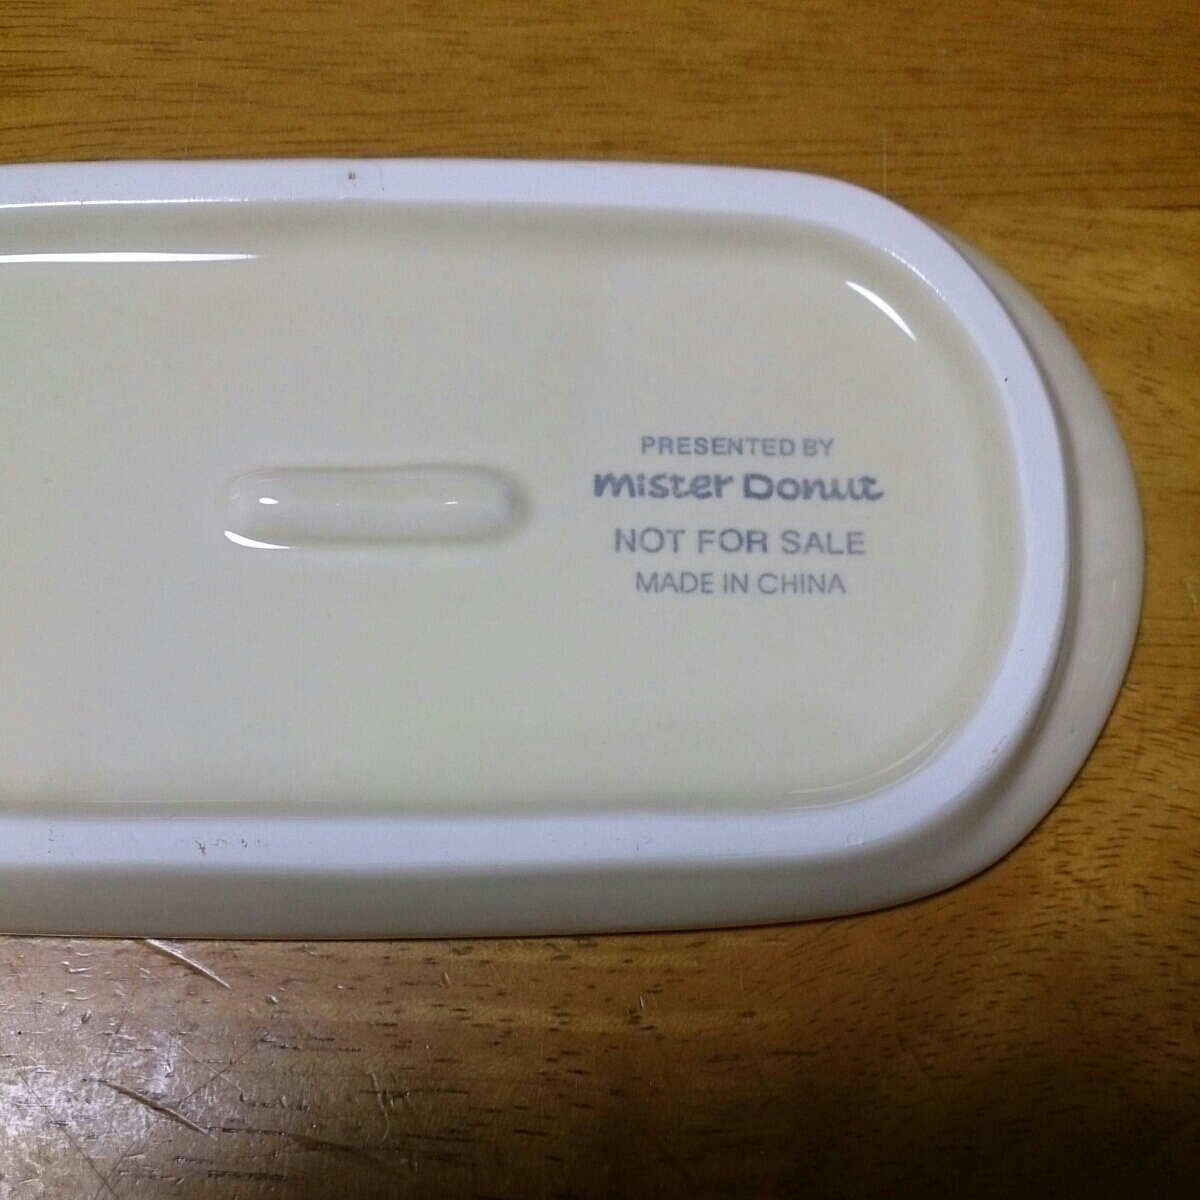  mistake do* Pingu & pin ga* Mini pot plate attaching * not for sale rare unused goods * Mister Donut case retro 